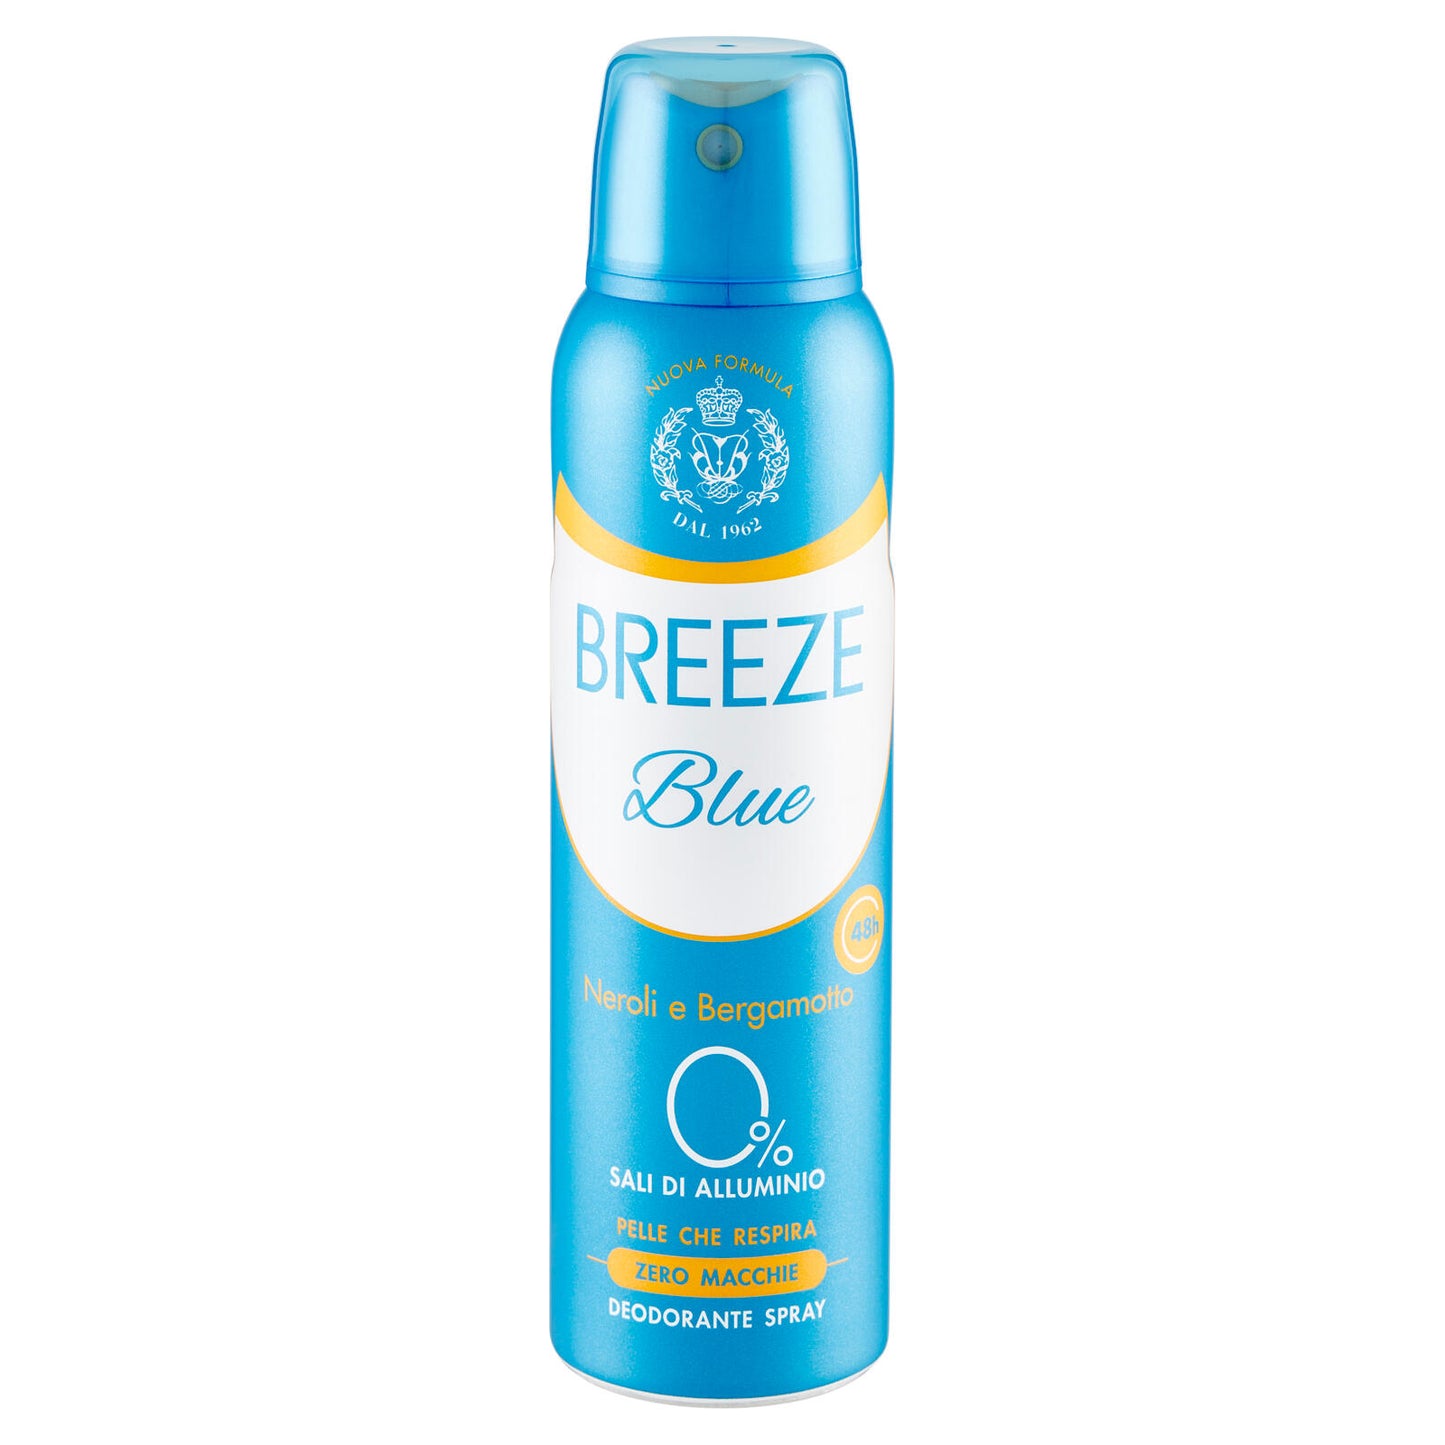 Breeze Blue Deodorante Spray 150 mL